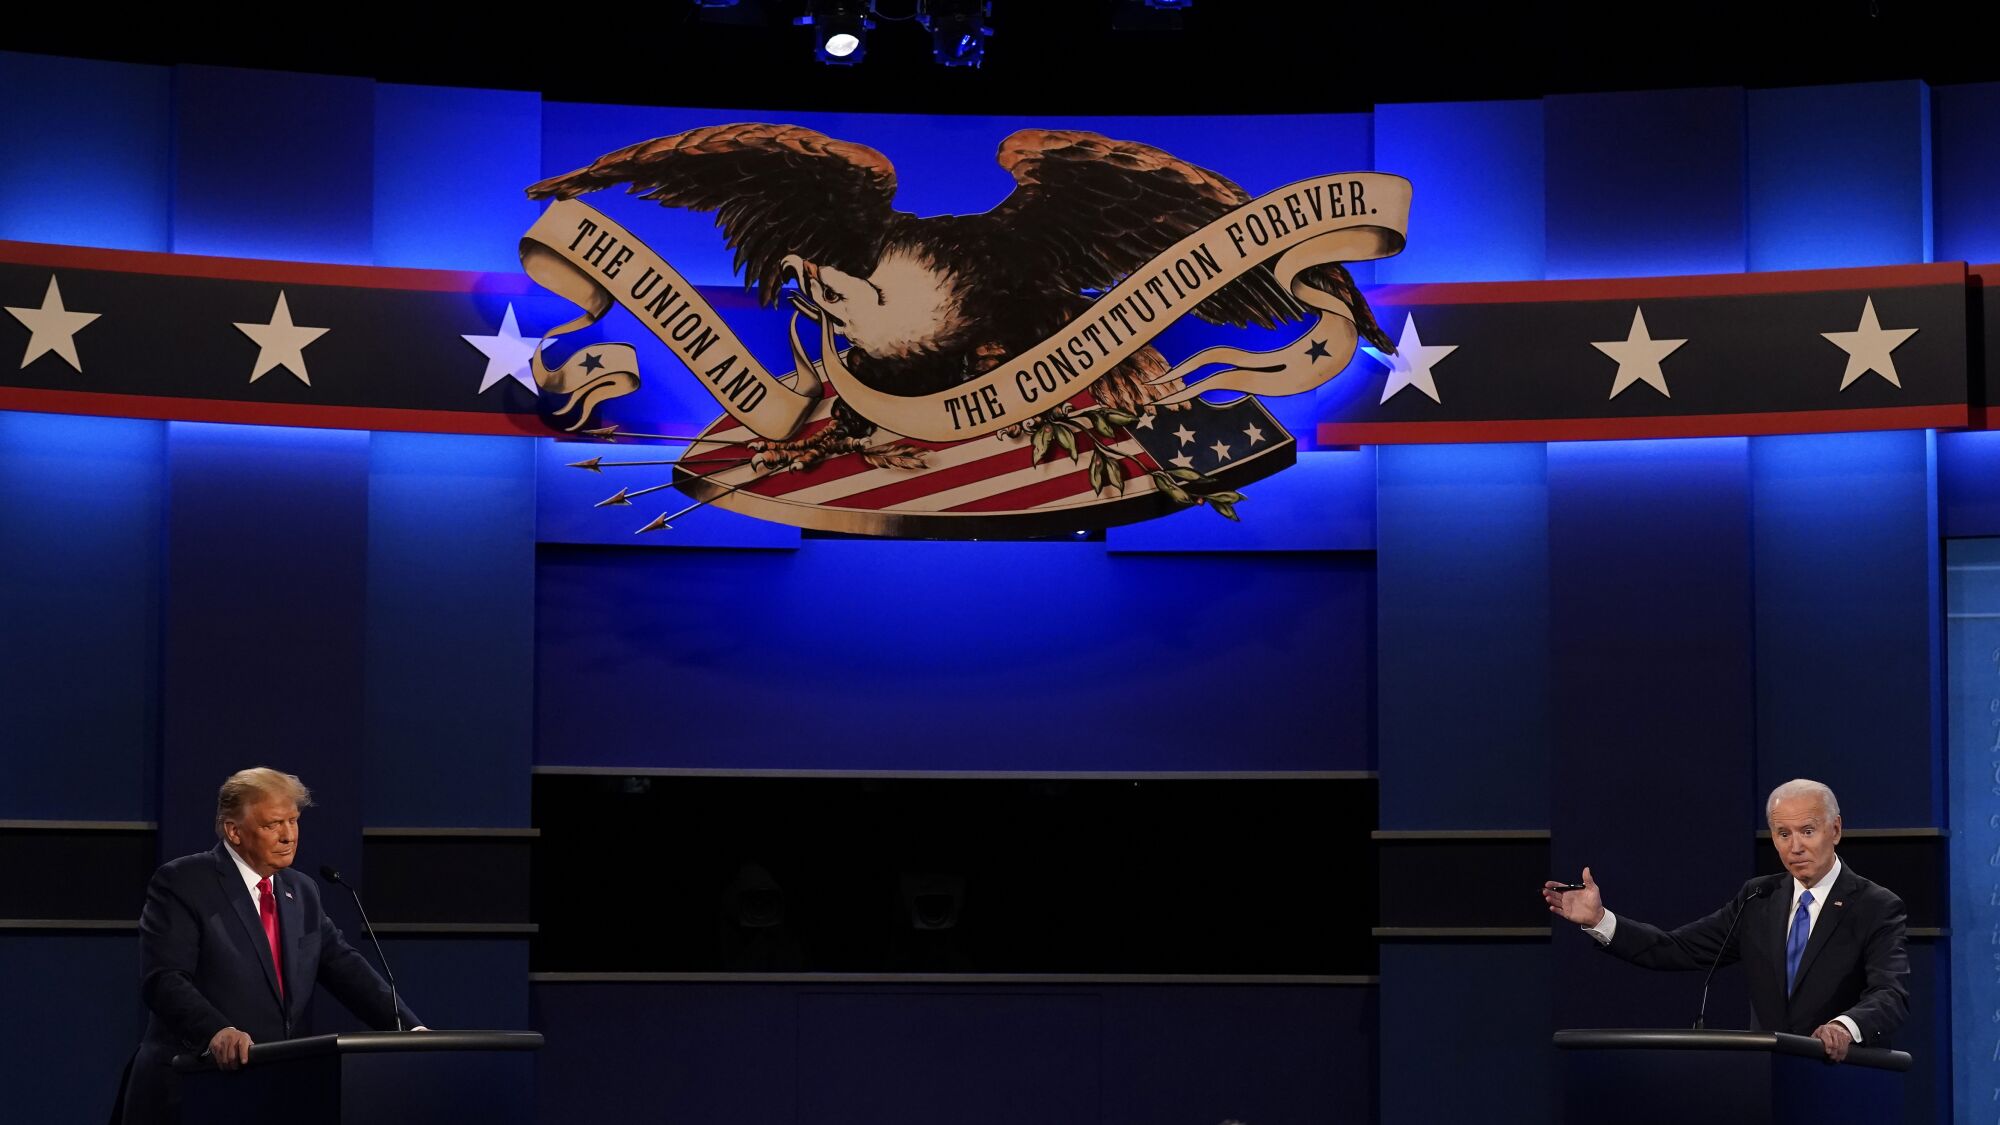 Joe Biden gestures toward President Trump on the debate stage in front of a bald eagle logo